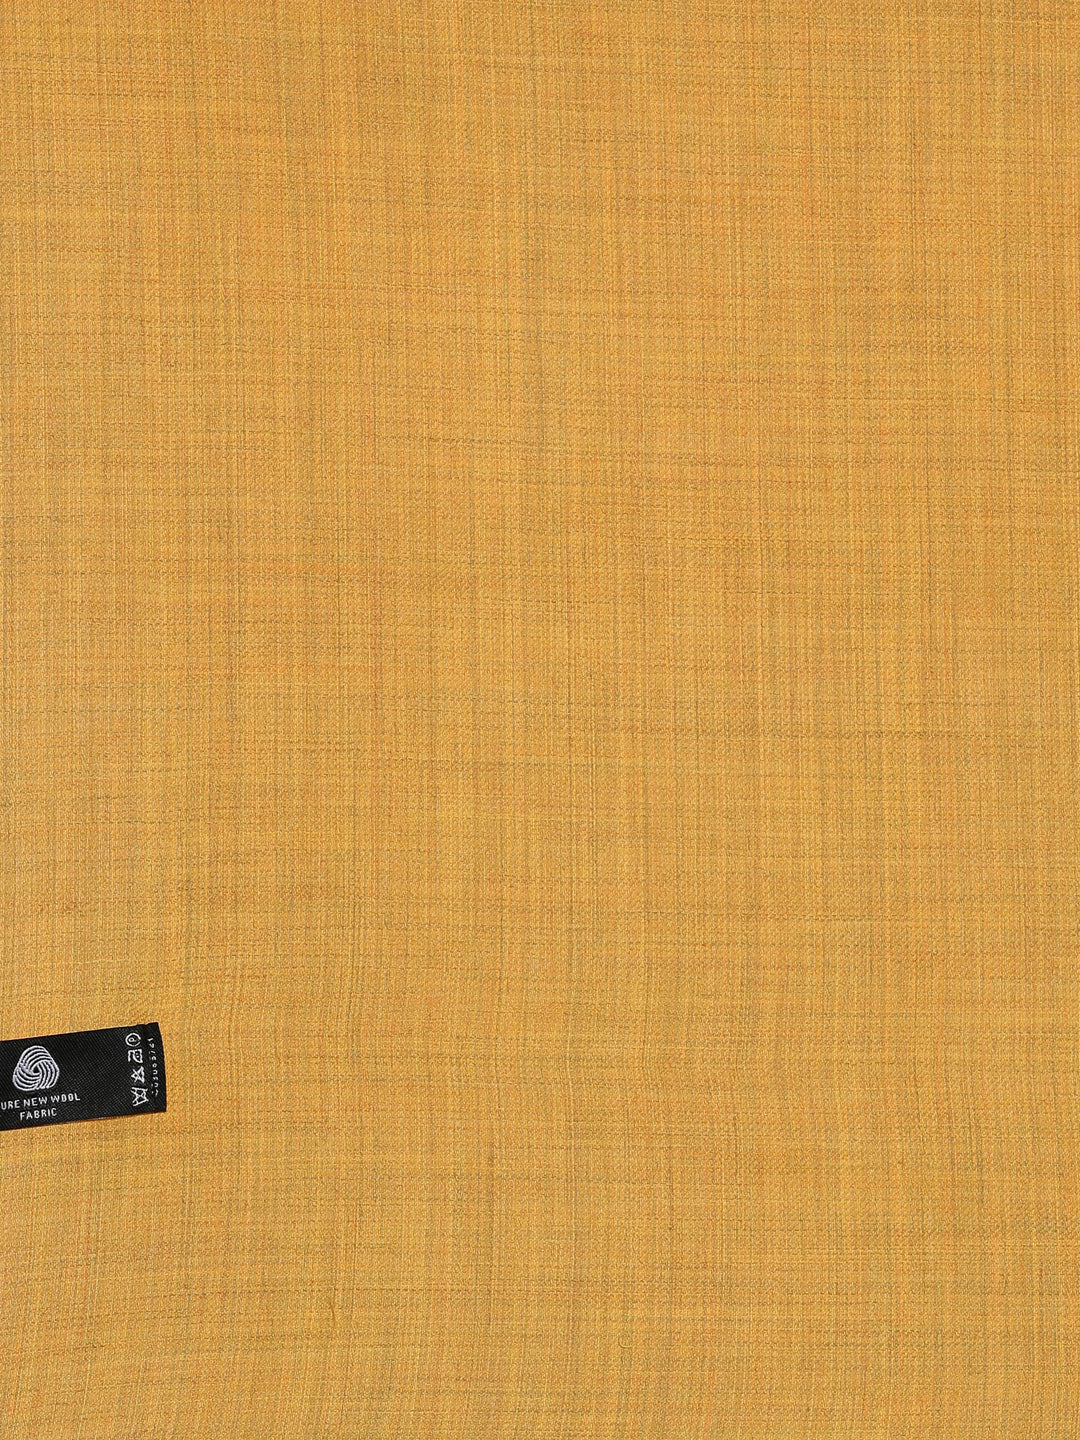 Women’s Yellow Pure Wool Printed Shawl (Size 40x80)